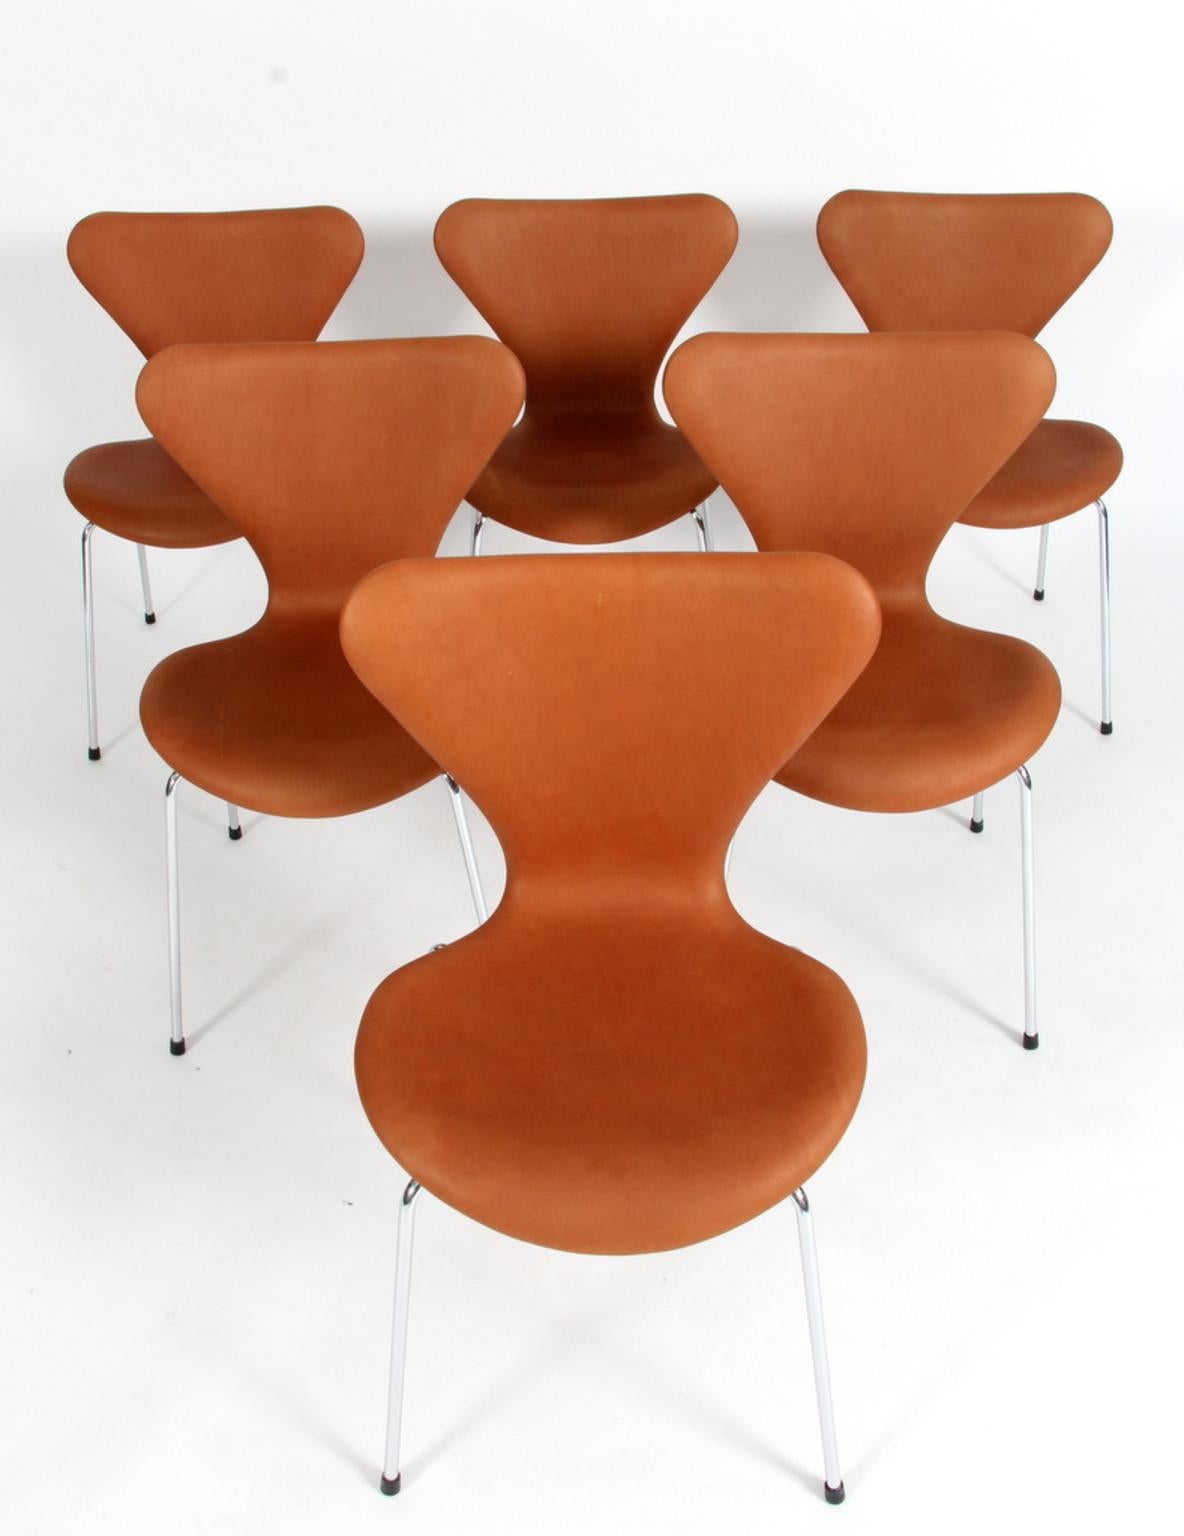 Arne Jacobsen dining chair new upholstered with cognac aniline leather.

Base of chrome steel tube.

Model 3107 Syveren, made by Fritz Hansen.